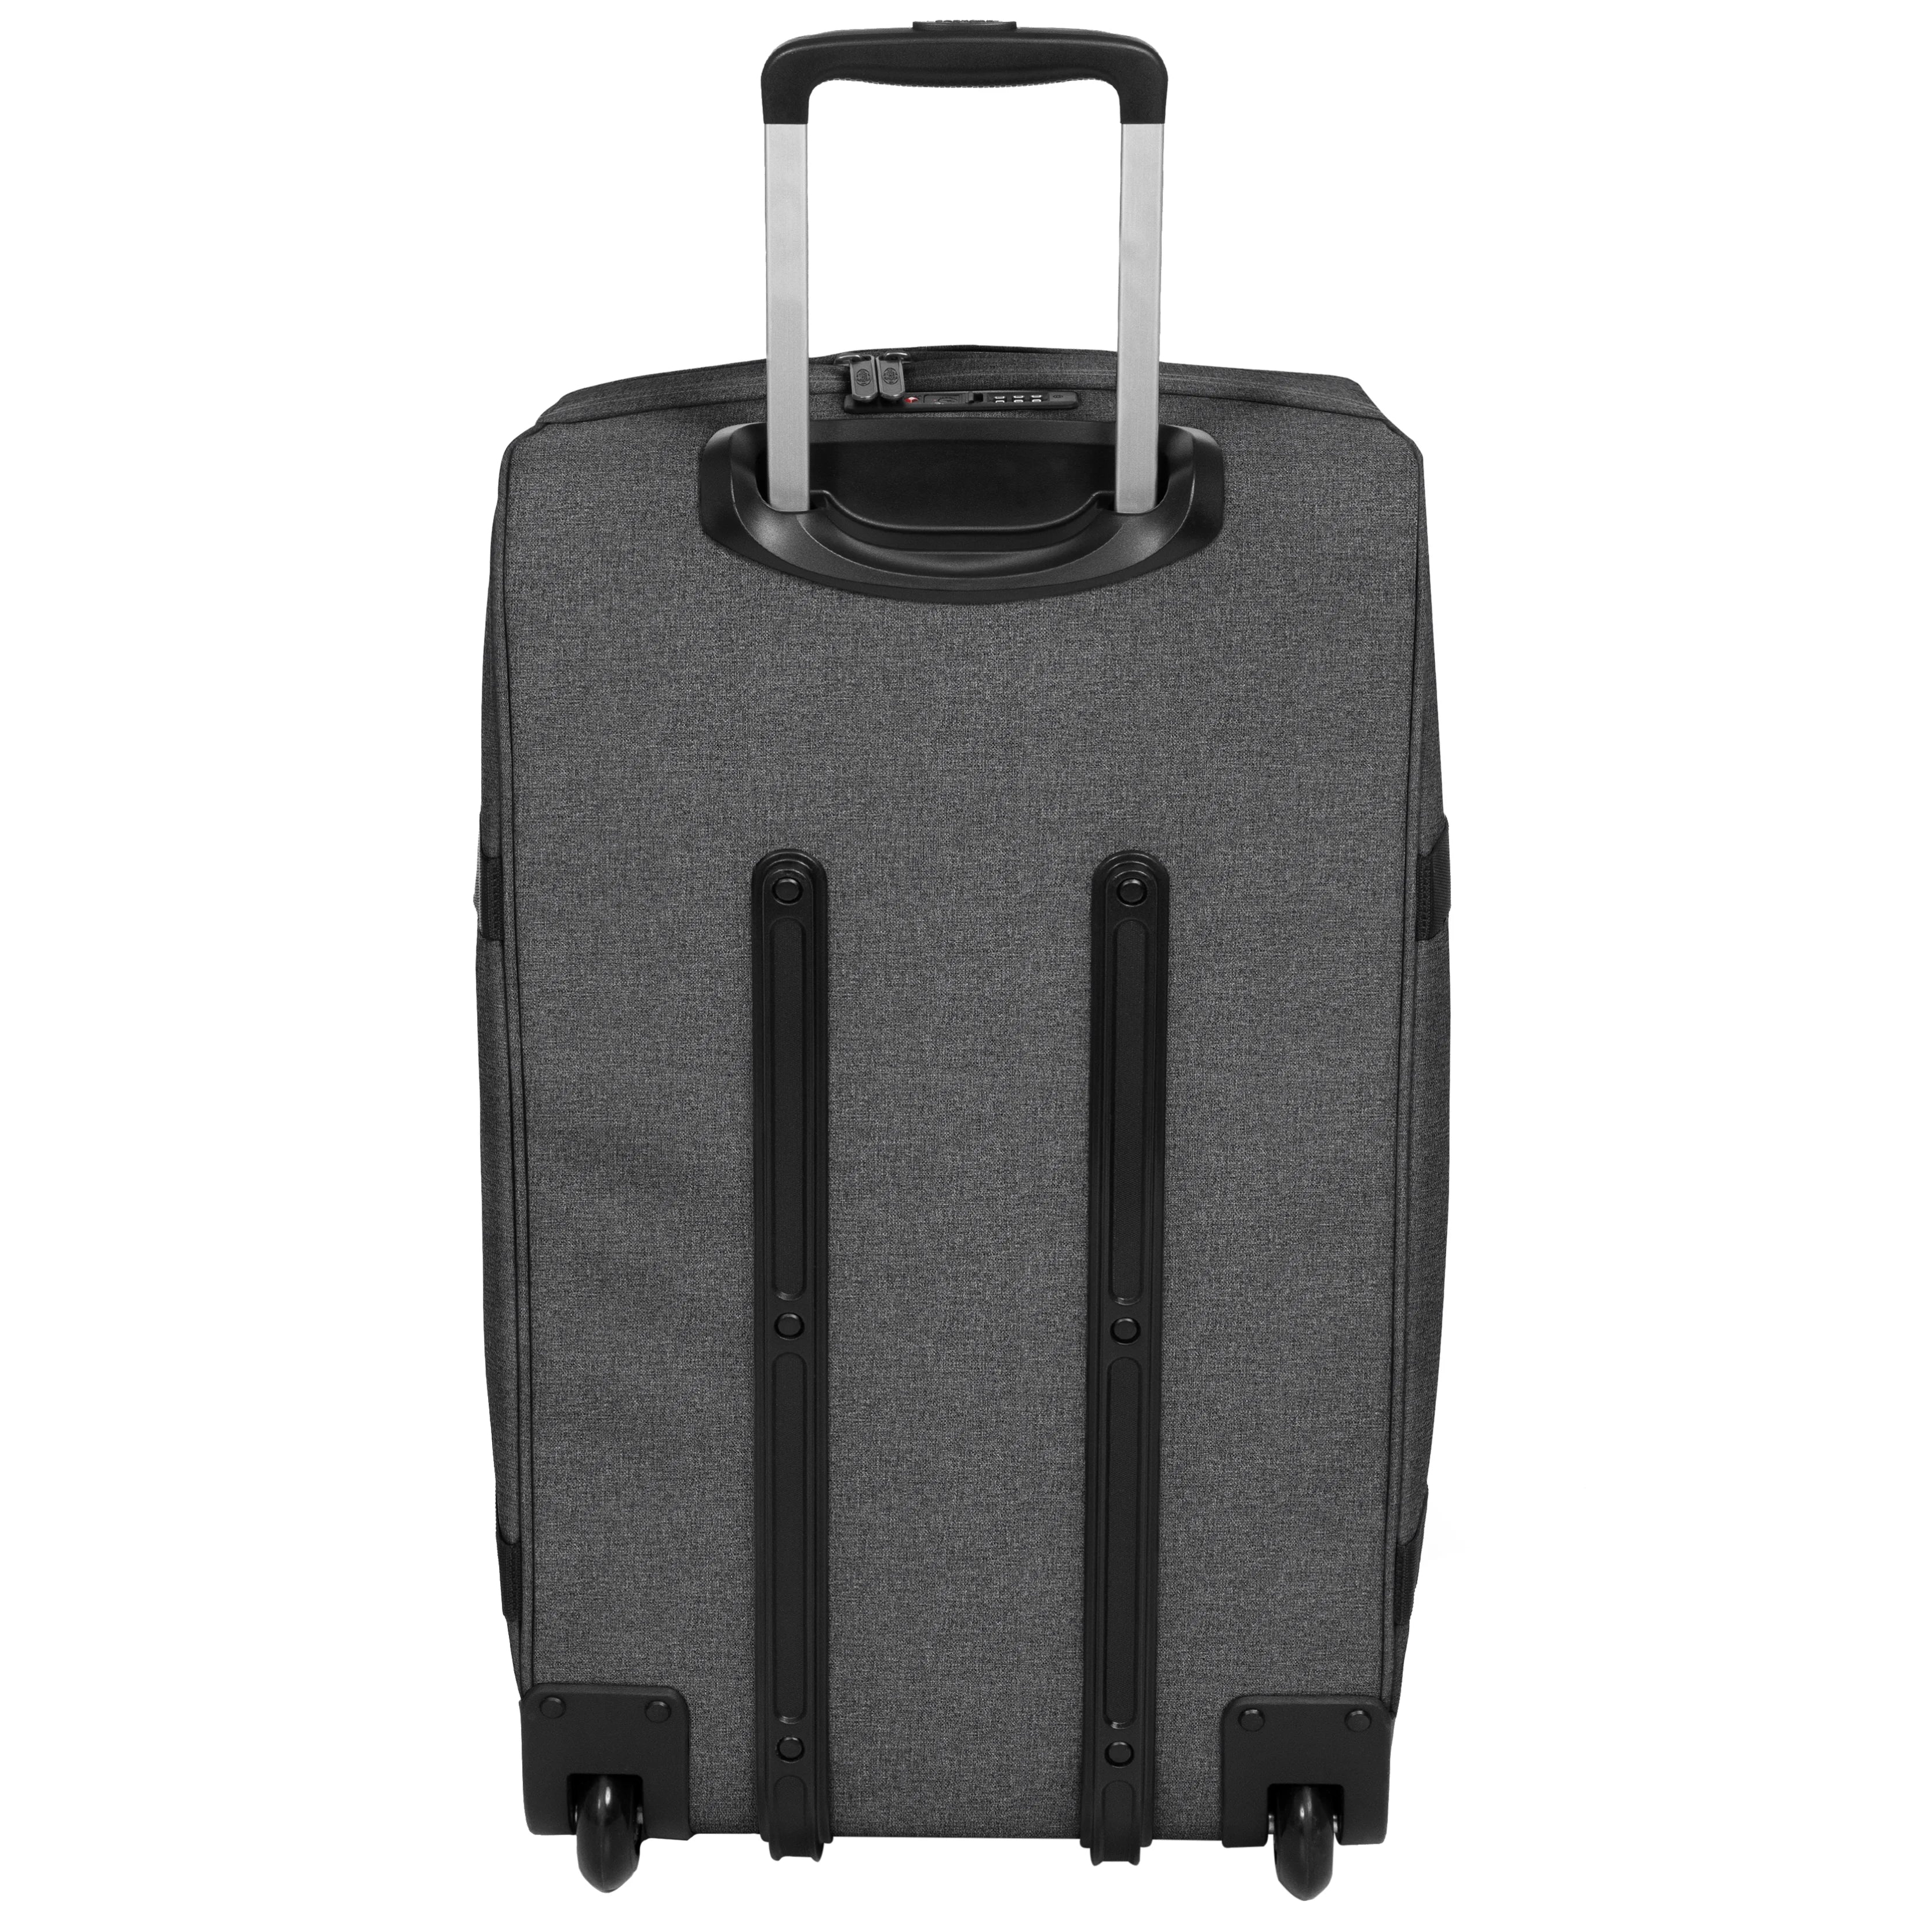 Eastpak Authentic Travel Transit'r L Rolling Travel Bag 79 cm - Black